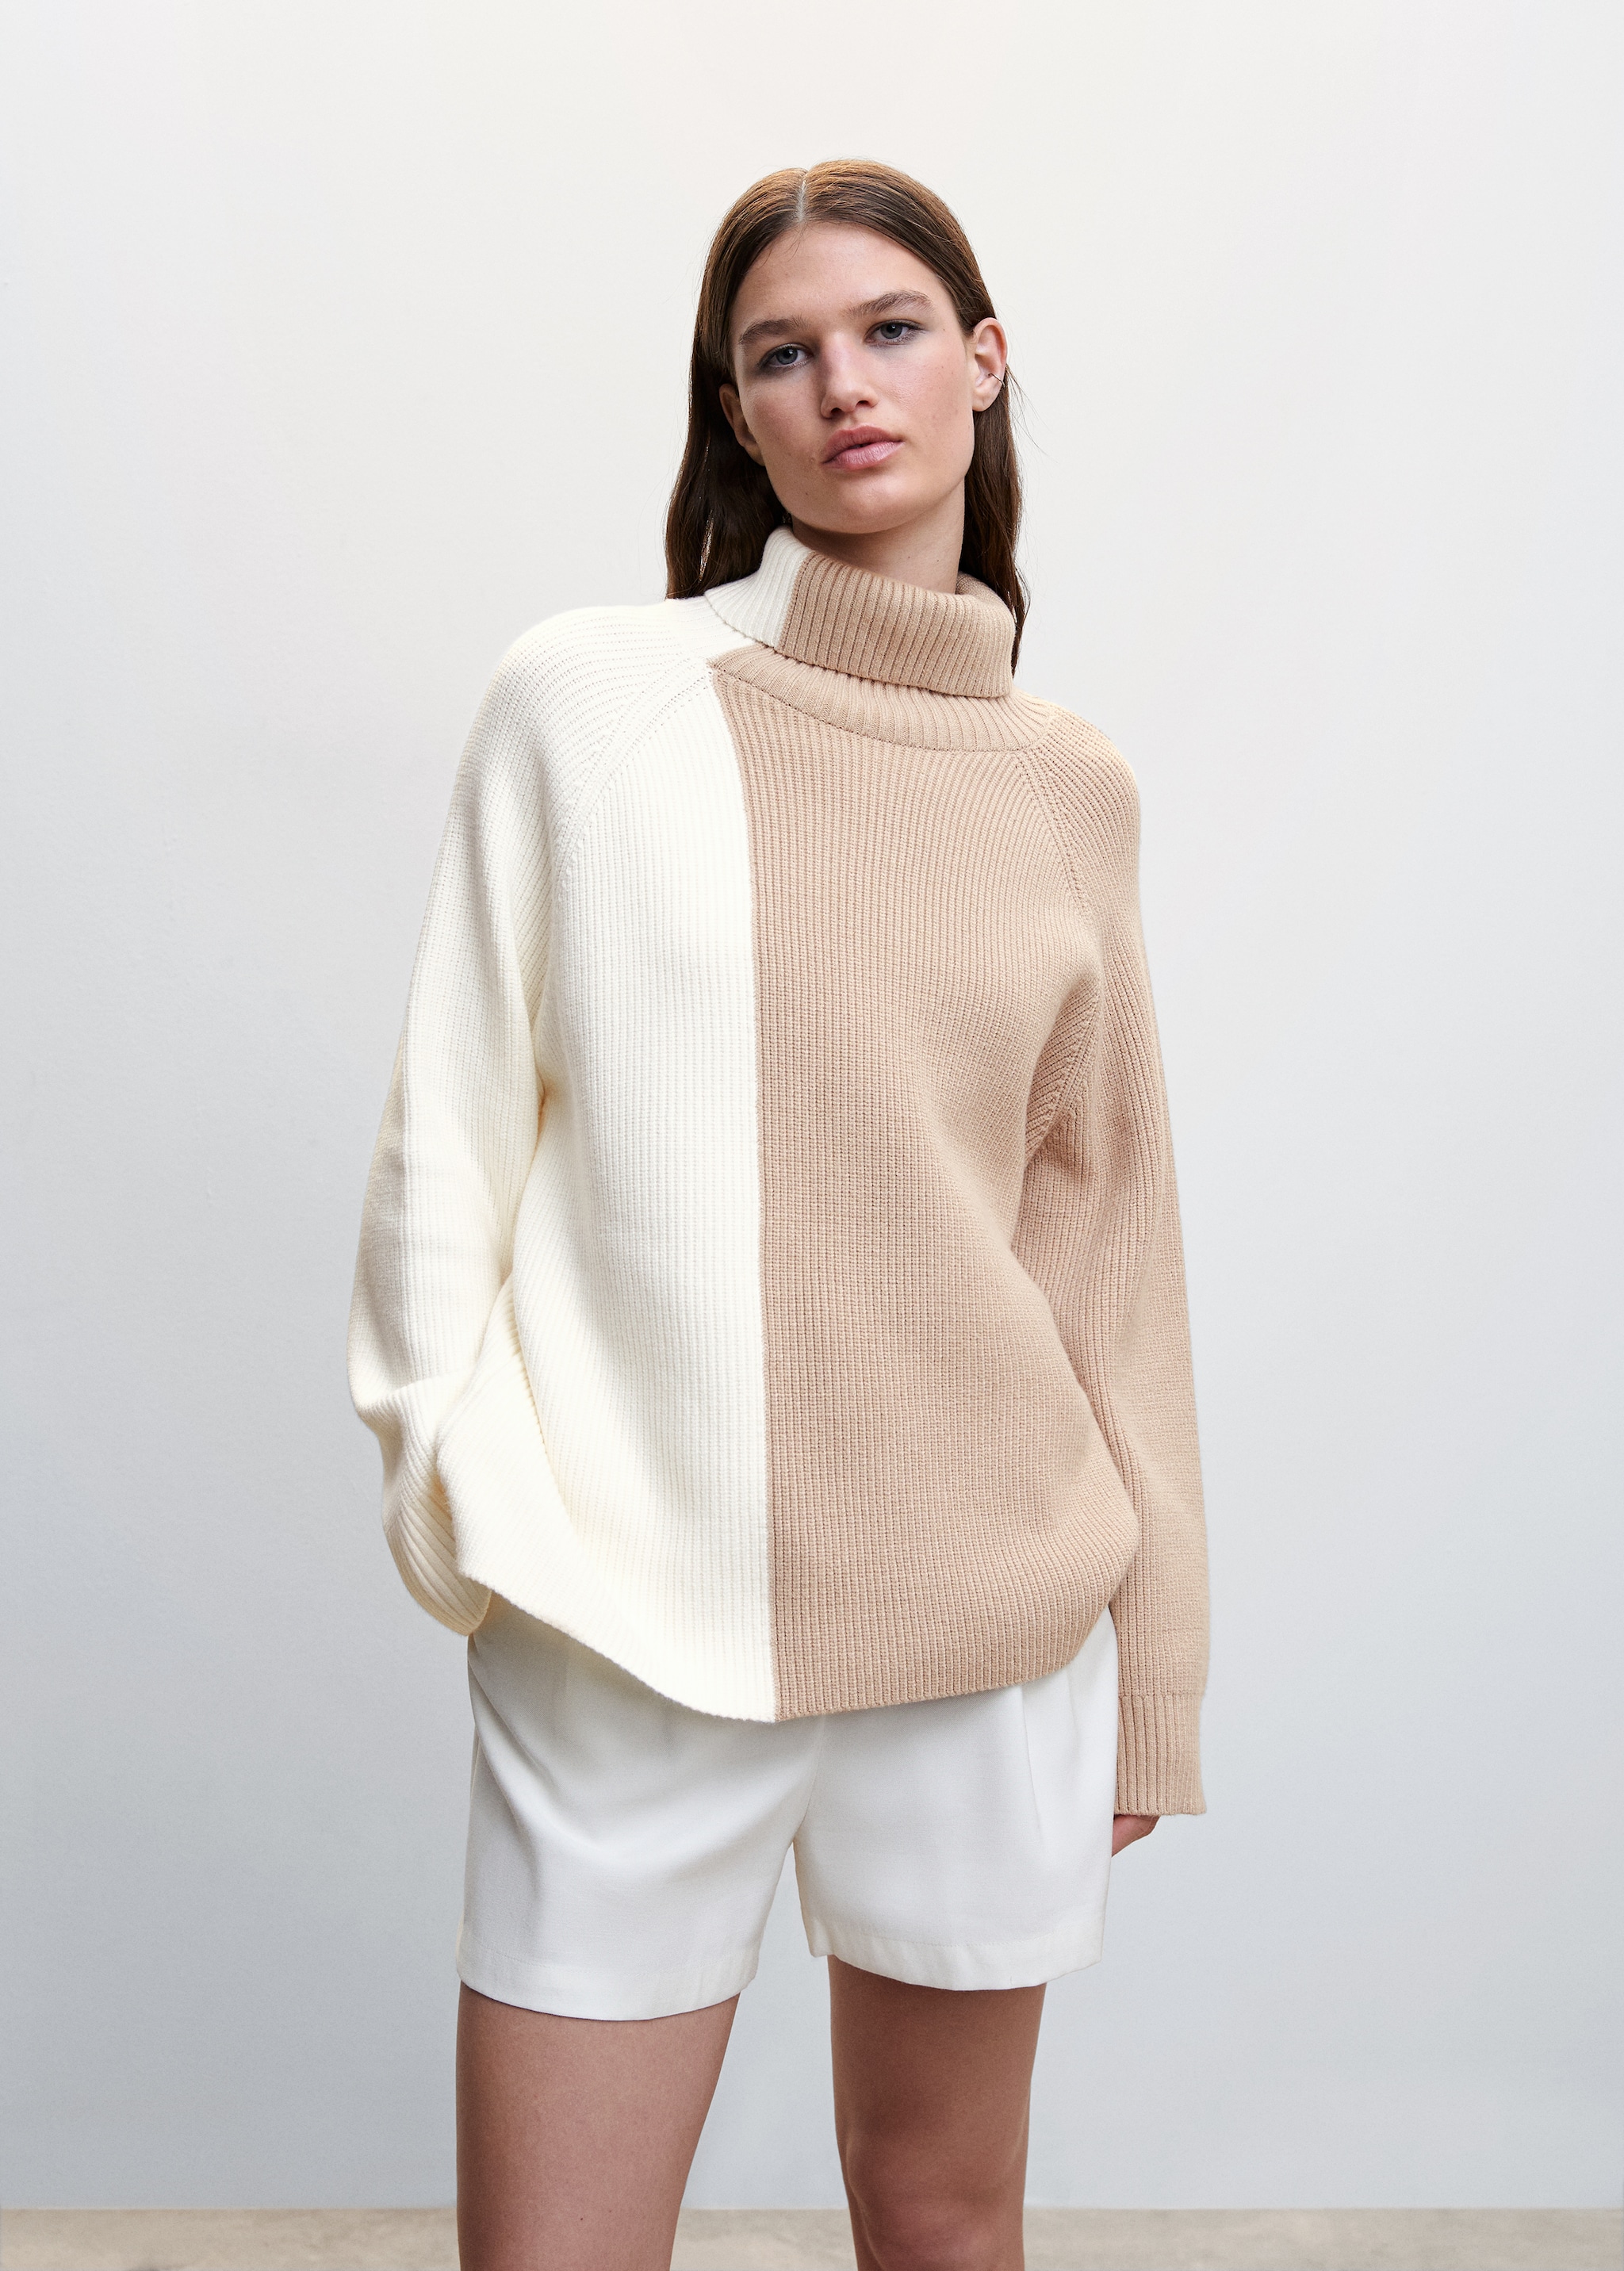 Two-tone turtleneck sweater - Medium plane